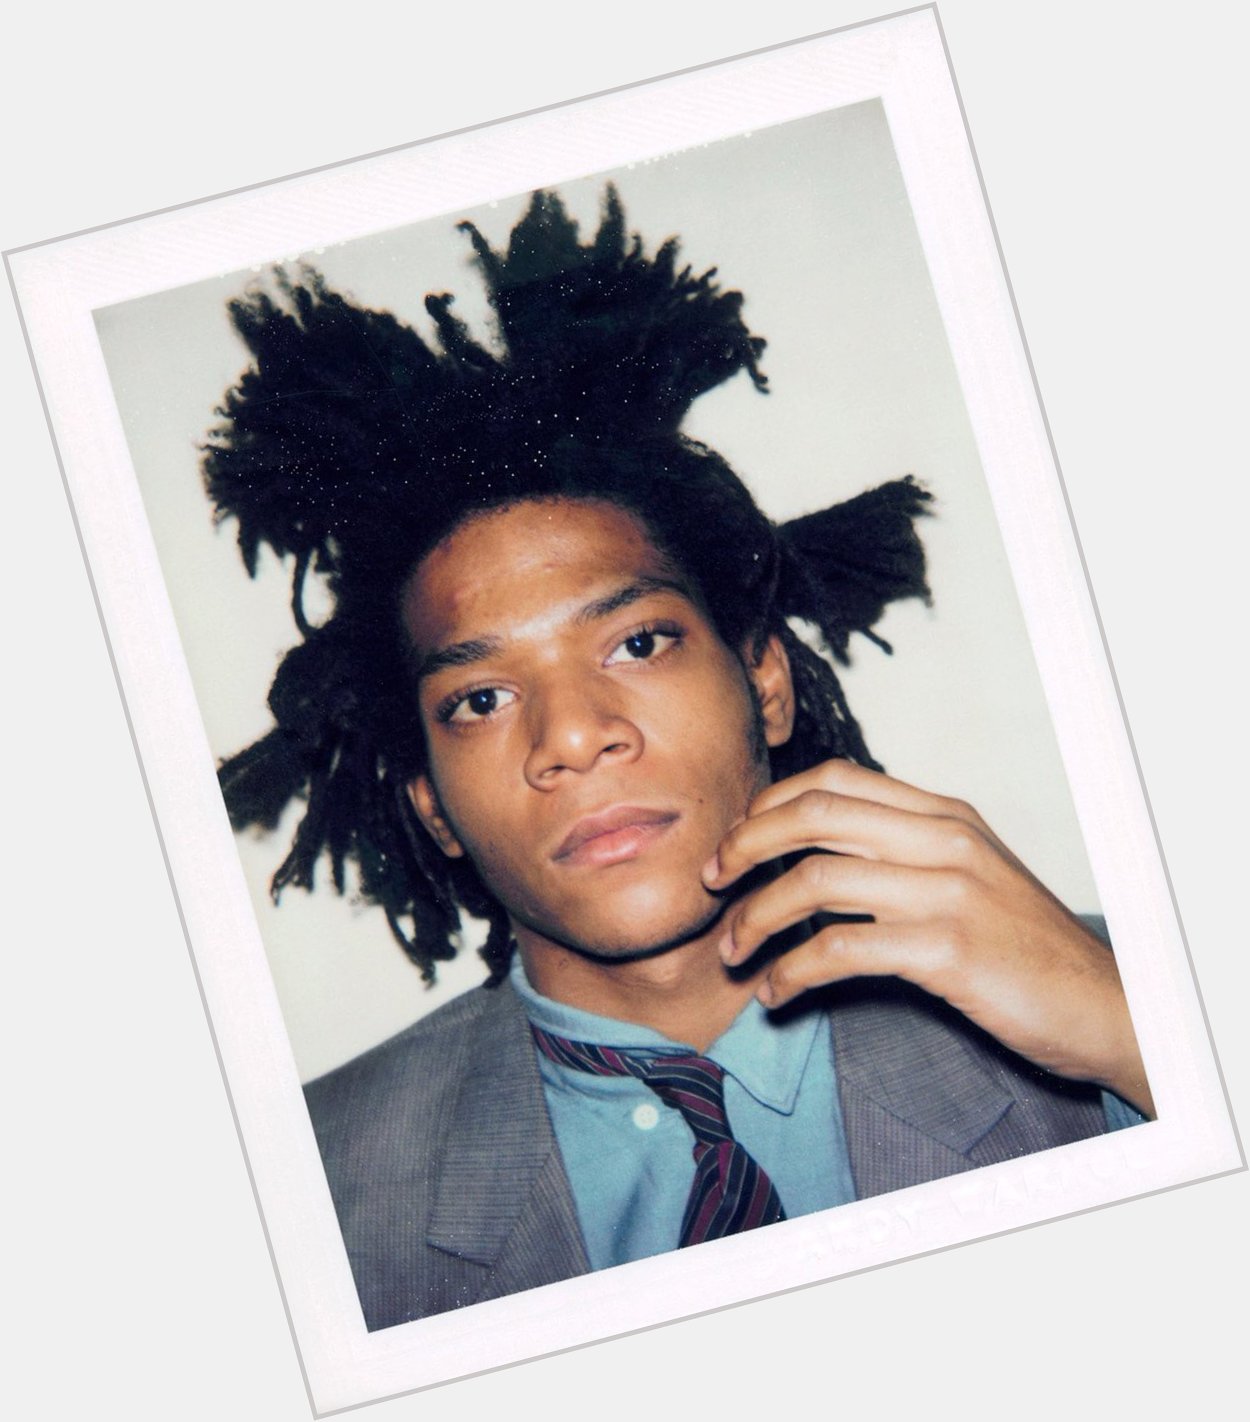 Happy birthday, Jean Michel Basquiat! 